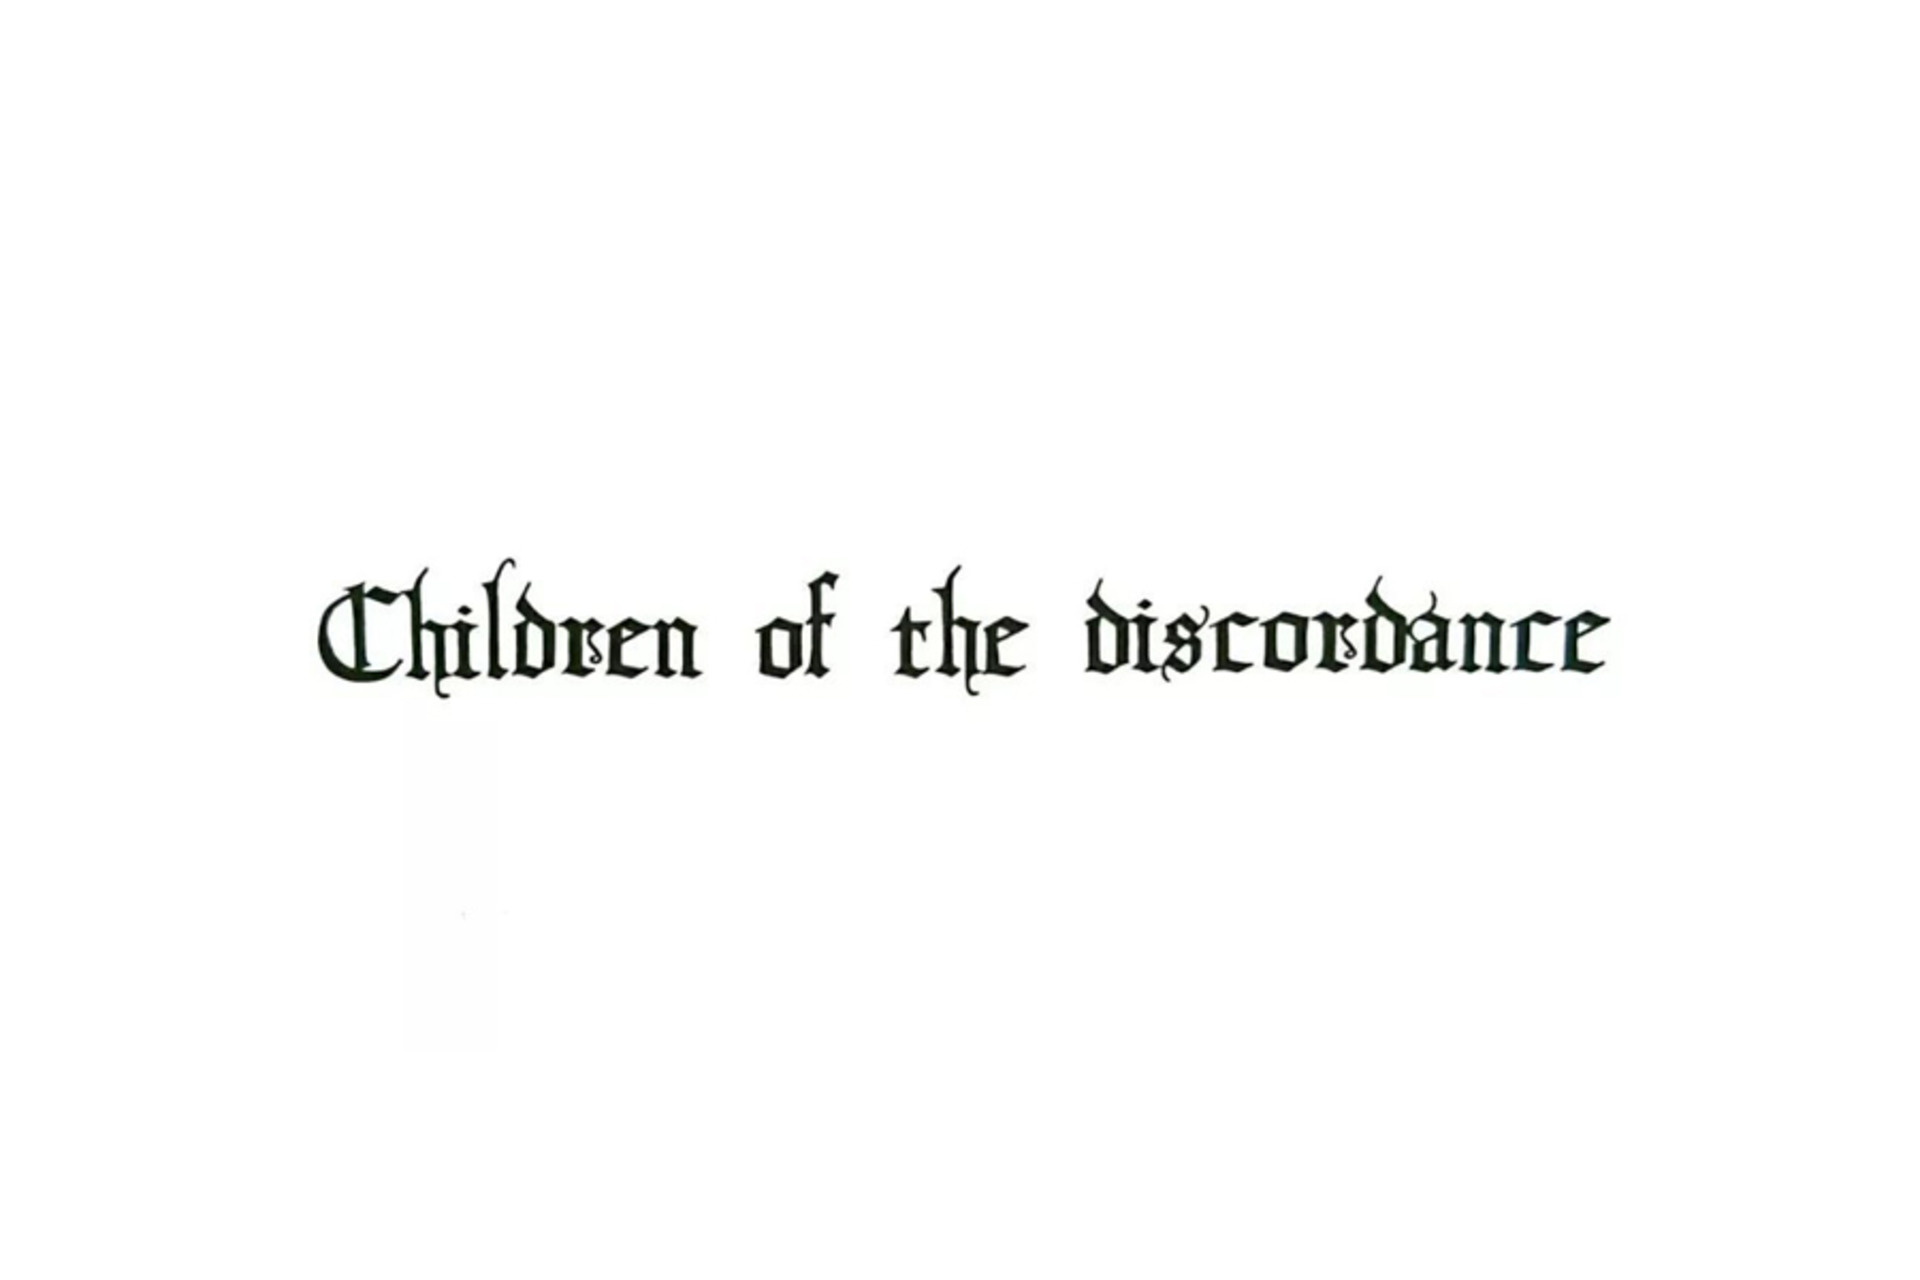 CHILDREN OF THE DISCORDANCE